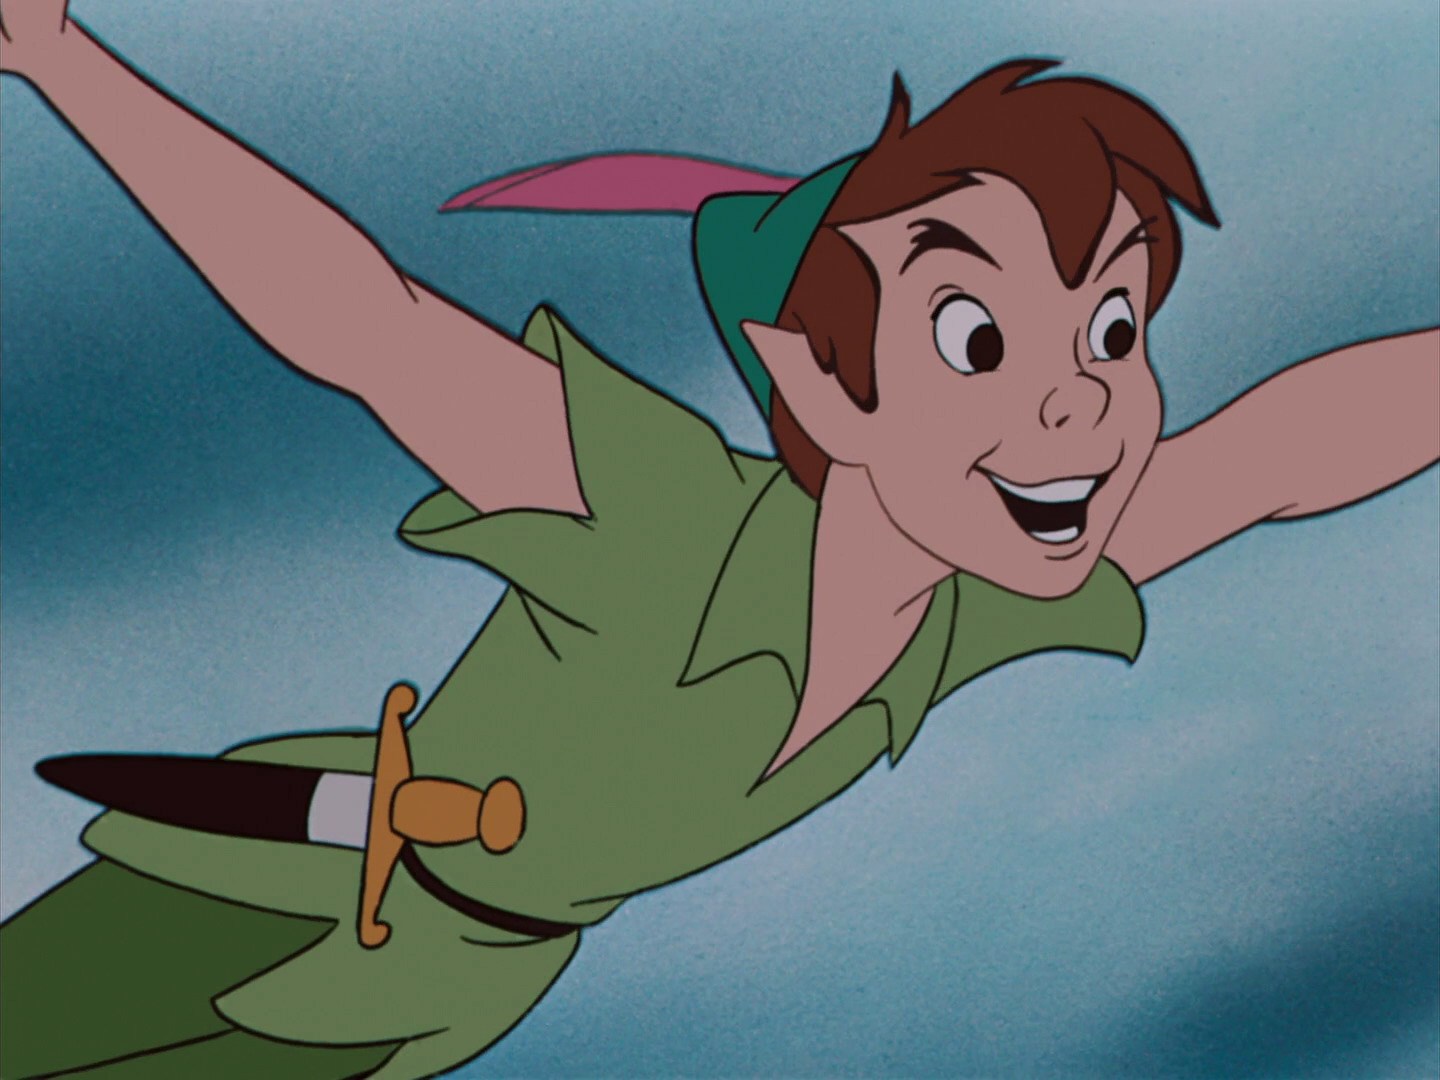 Peter Pan (character)/Gallery  Disney characters peter pan, Peter pan  characters, Peter pan disney